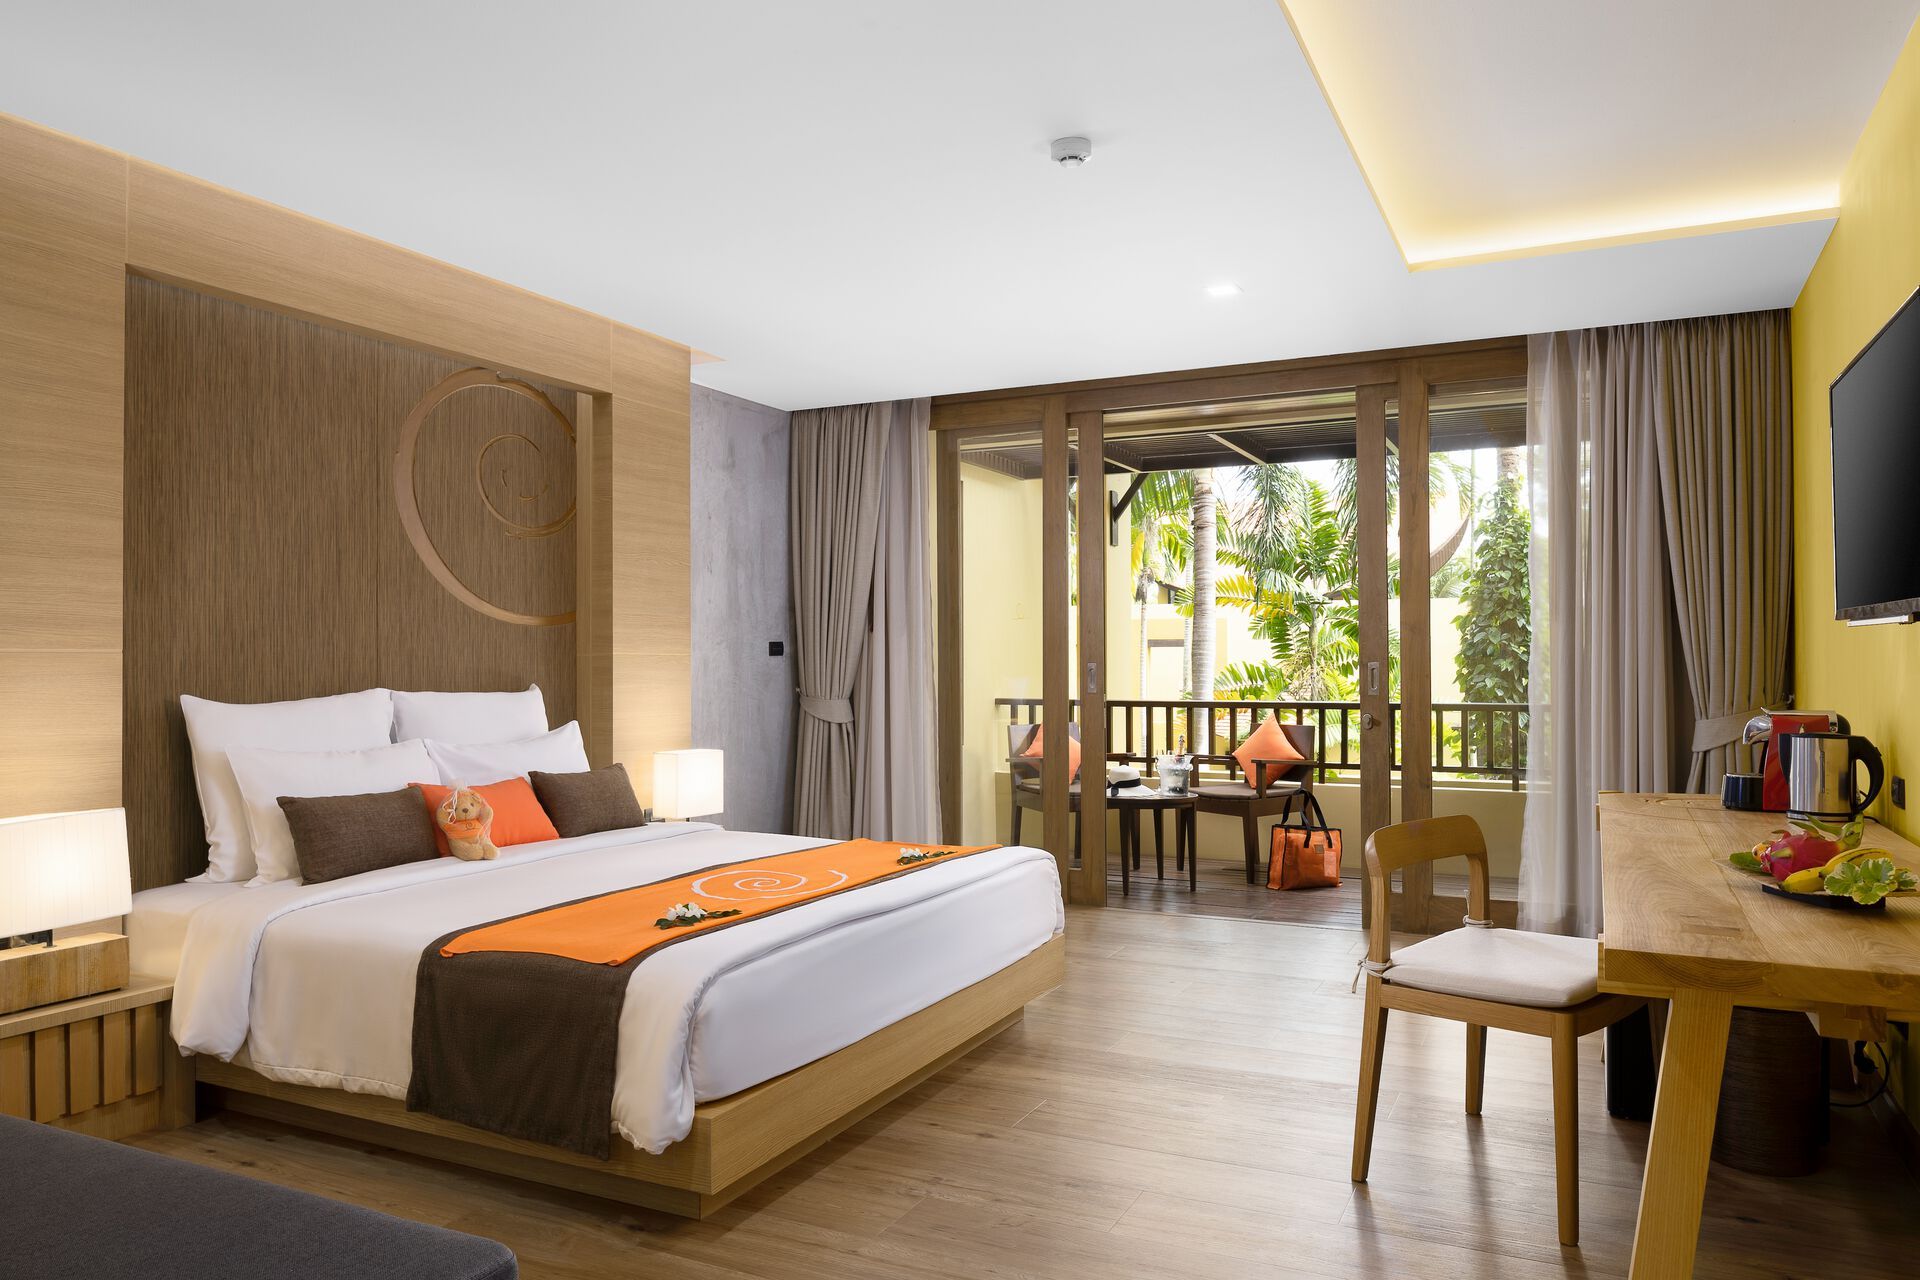 Thaïlande - Koh Samui - Hôtel New Star Beach Resort - transfert privé inclus 4*